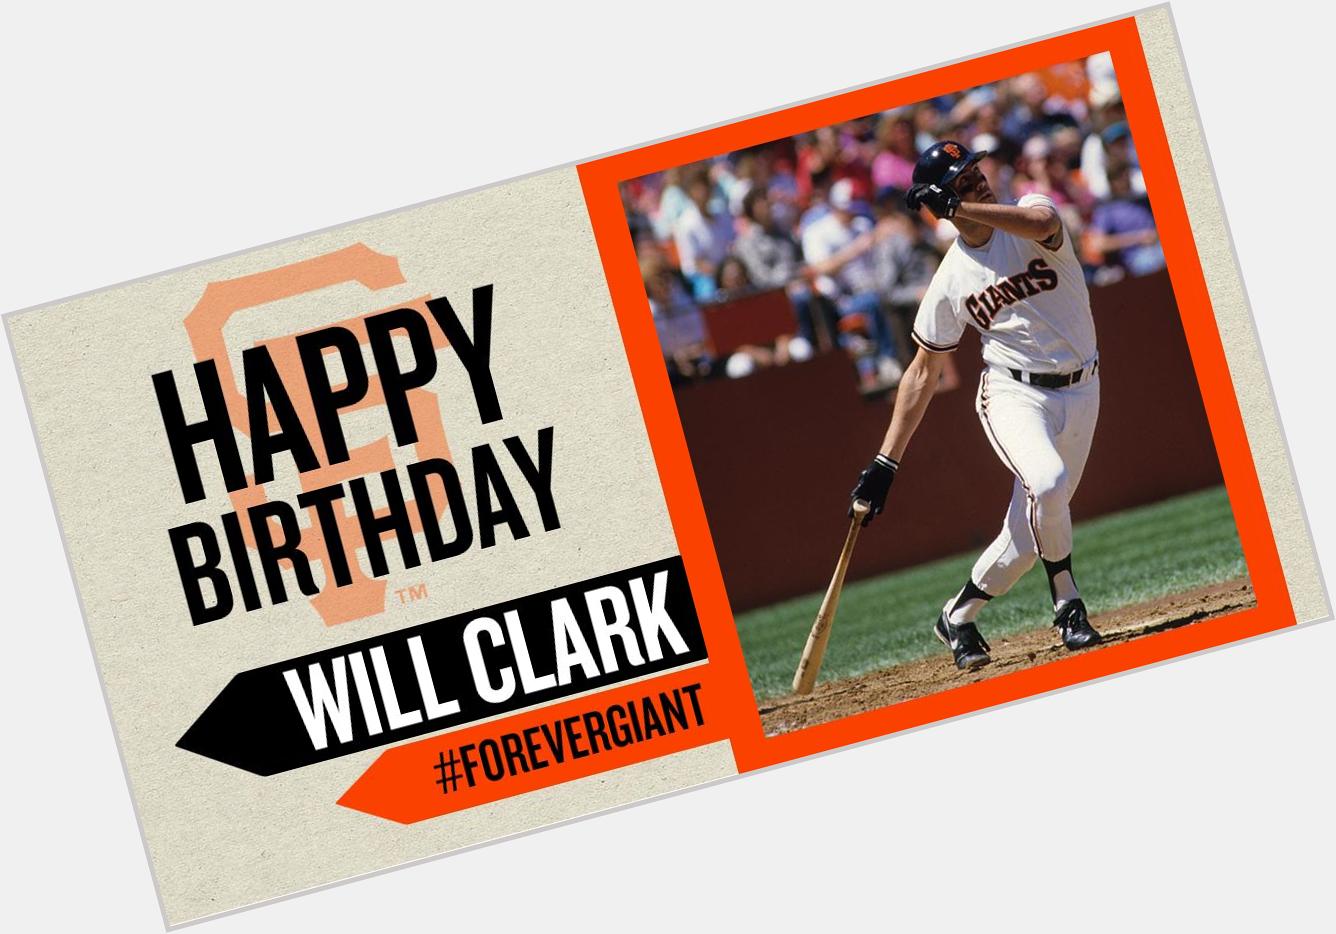 Happy Birthday to Will Clark!  